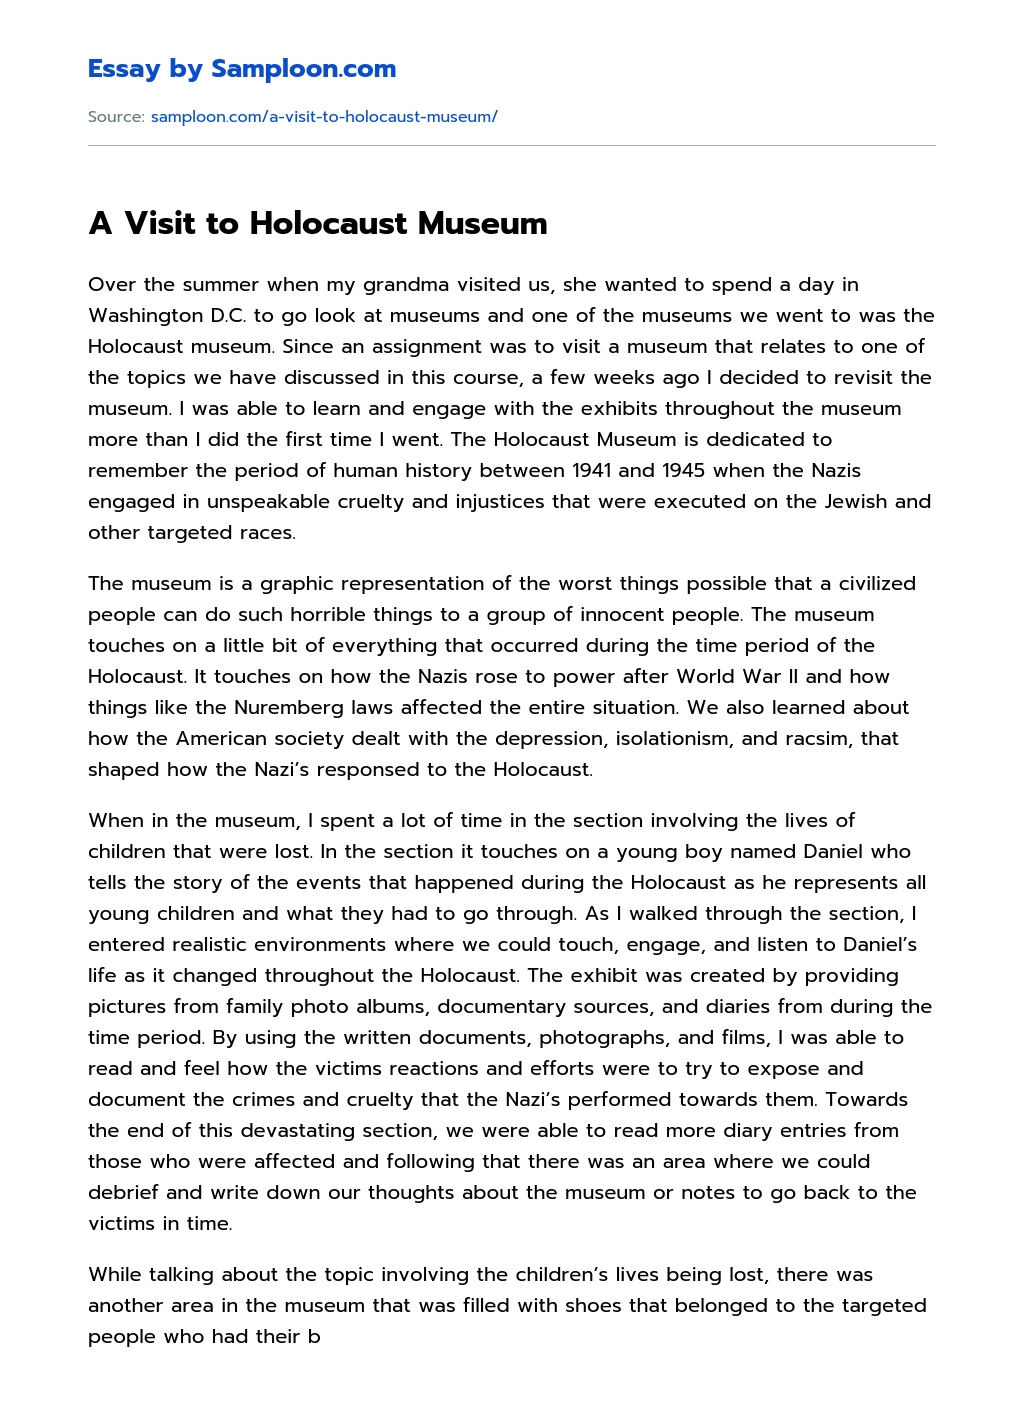 A Visit to Holocaust Museum essay